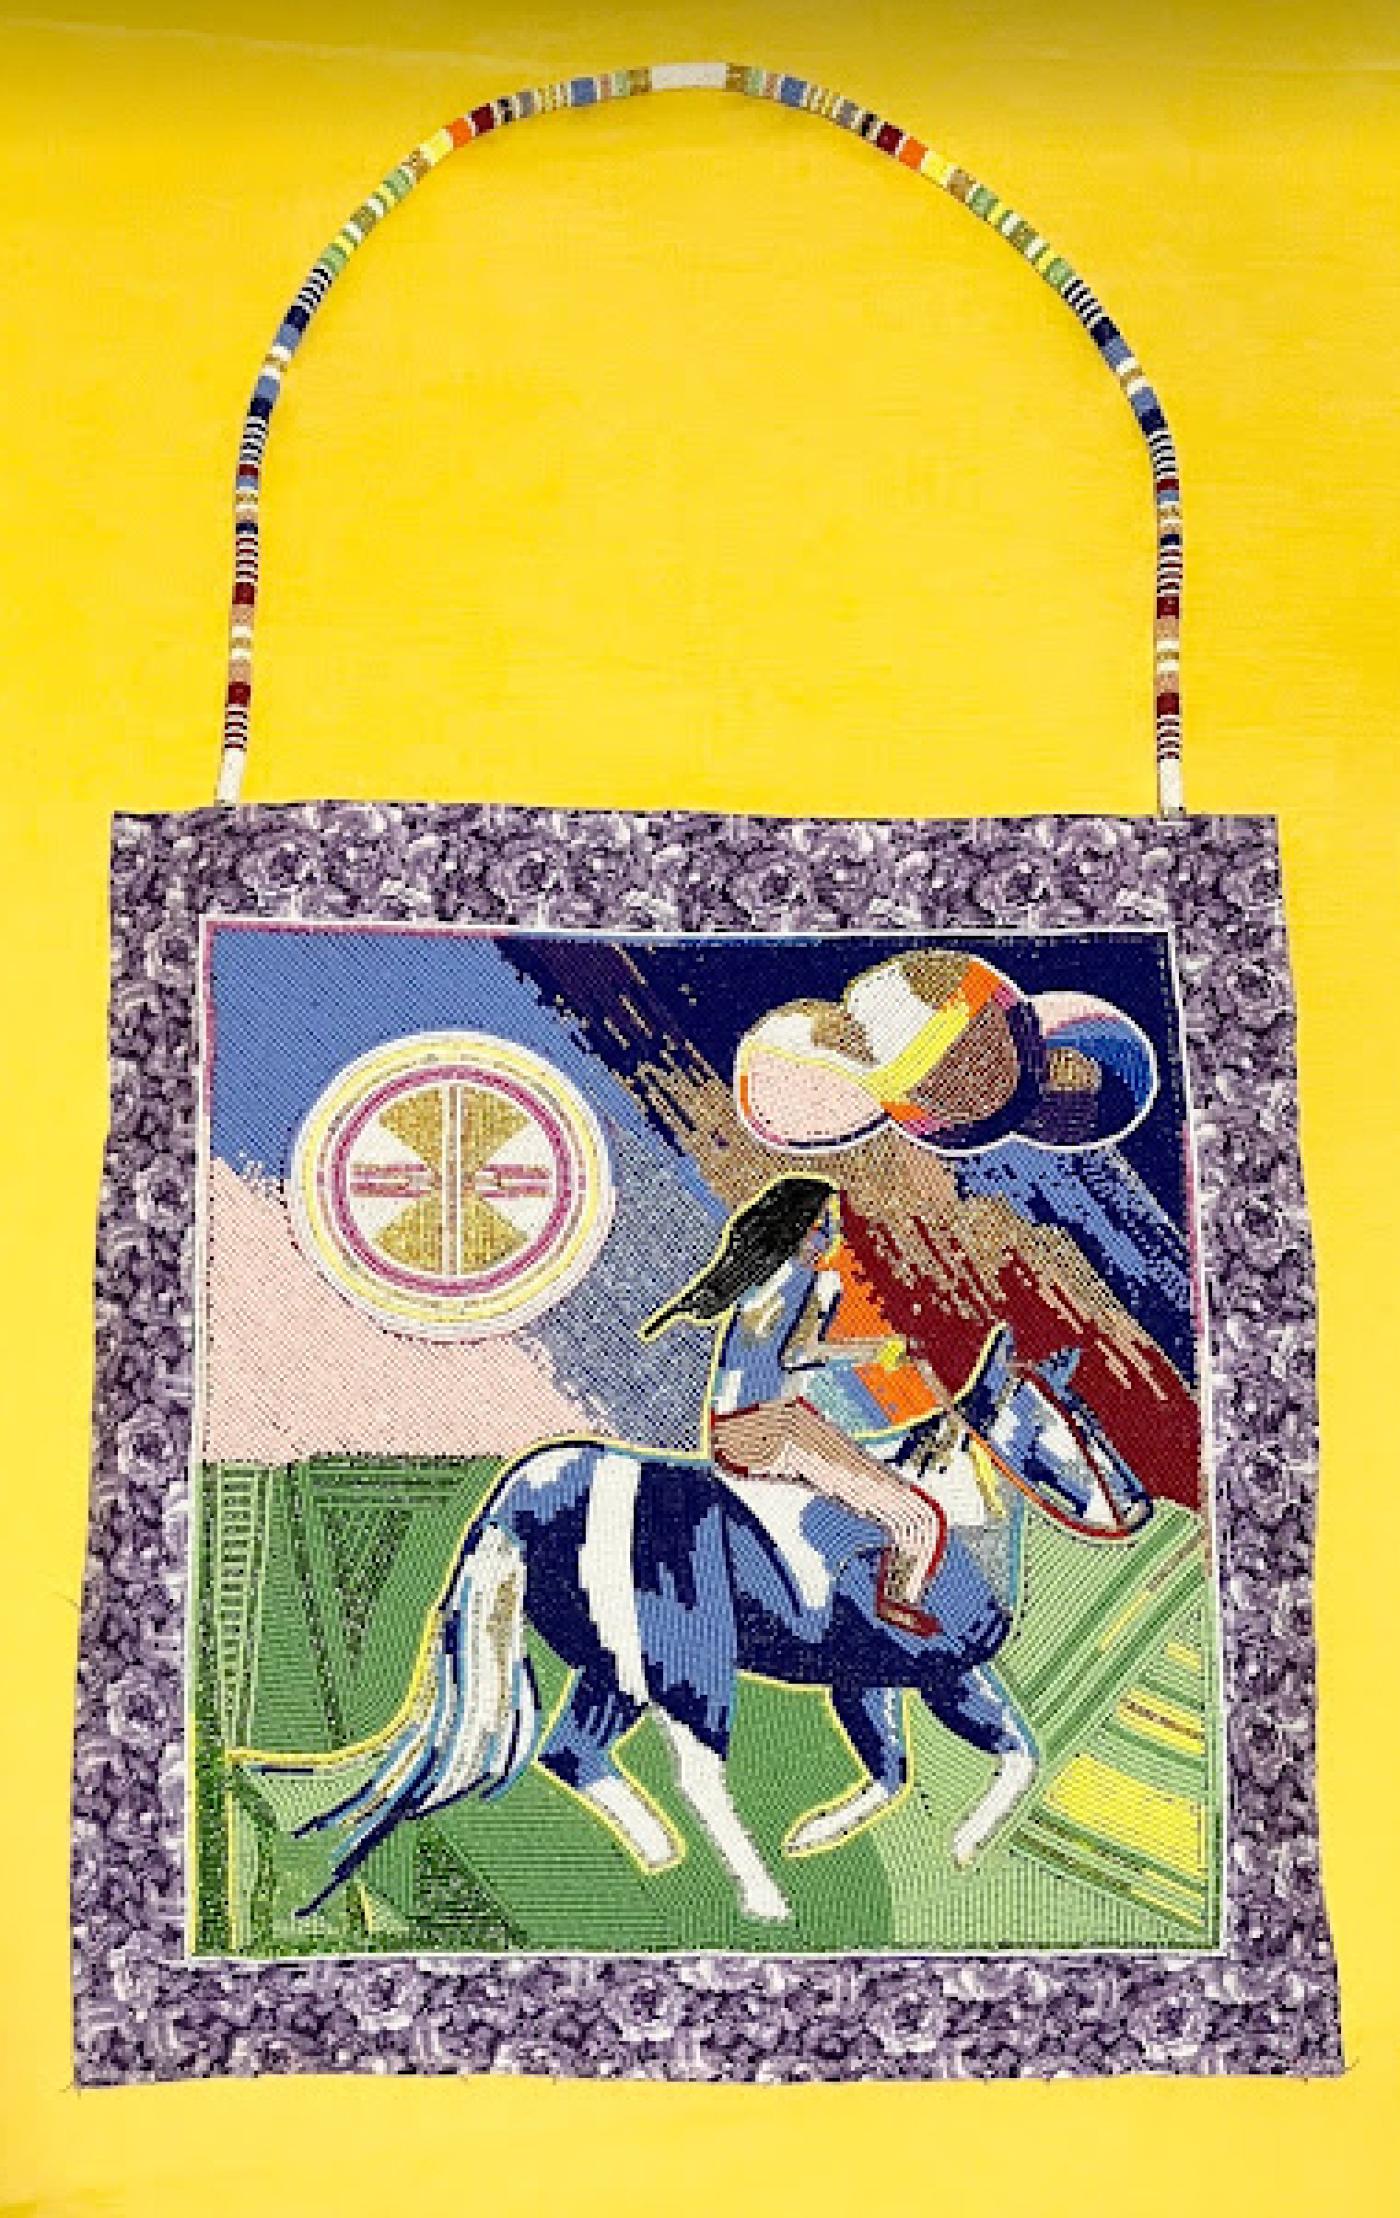 Beadwork purse of a person riding horseback across a green field.